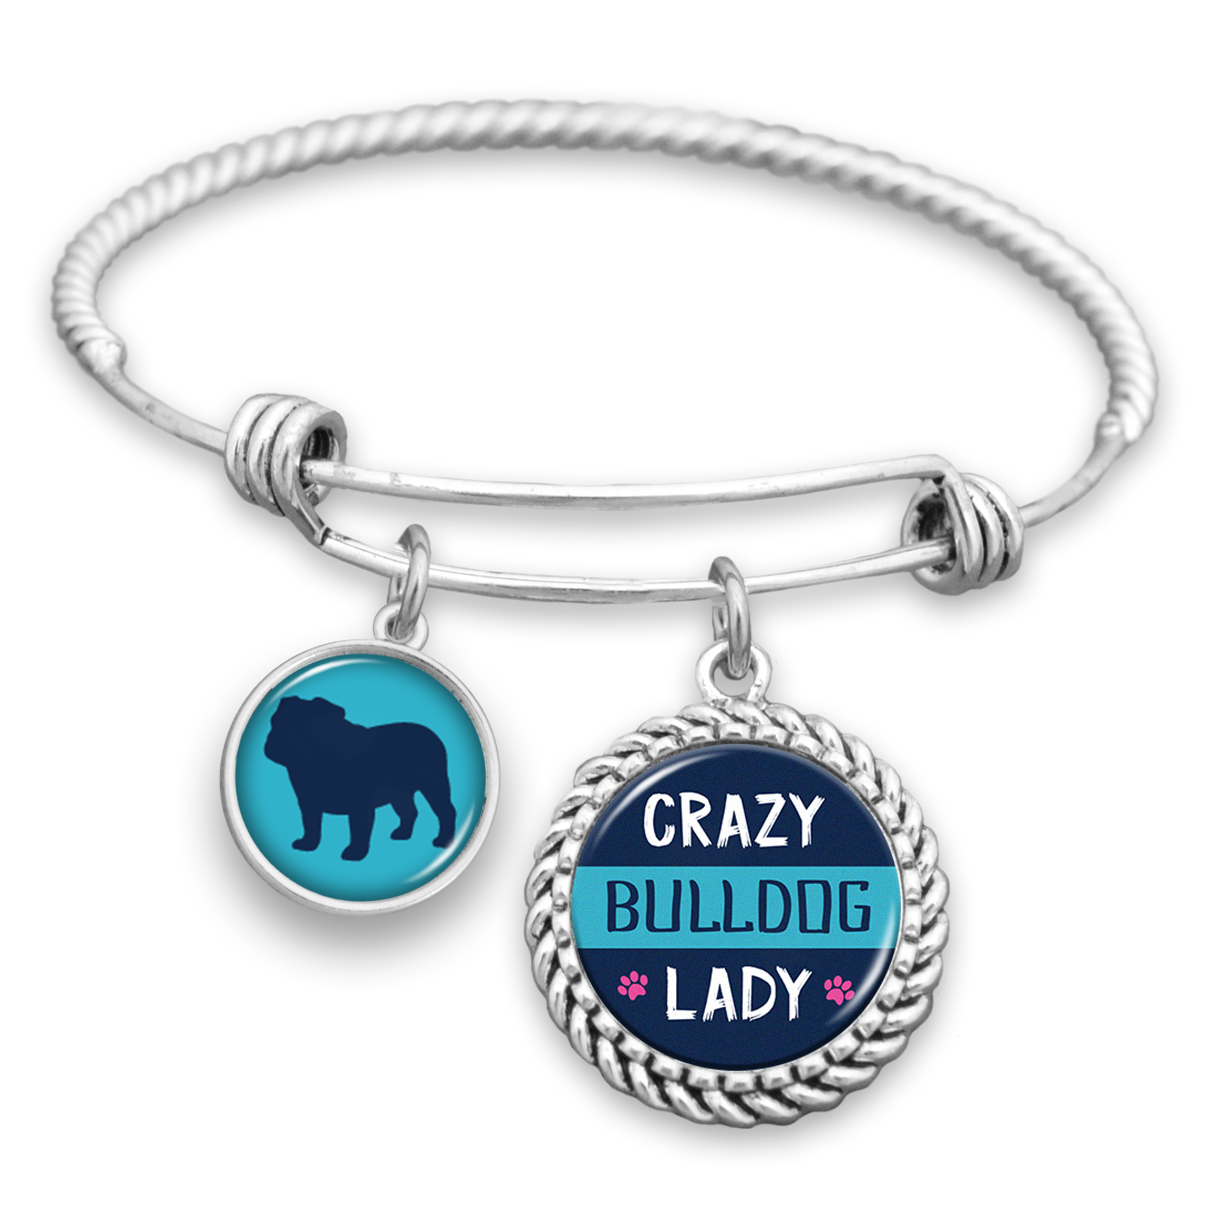 Crazy Bulldog Lady Charm Bracelet